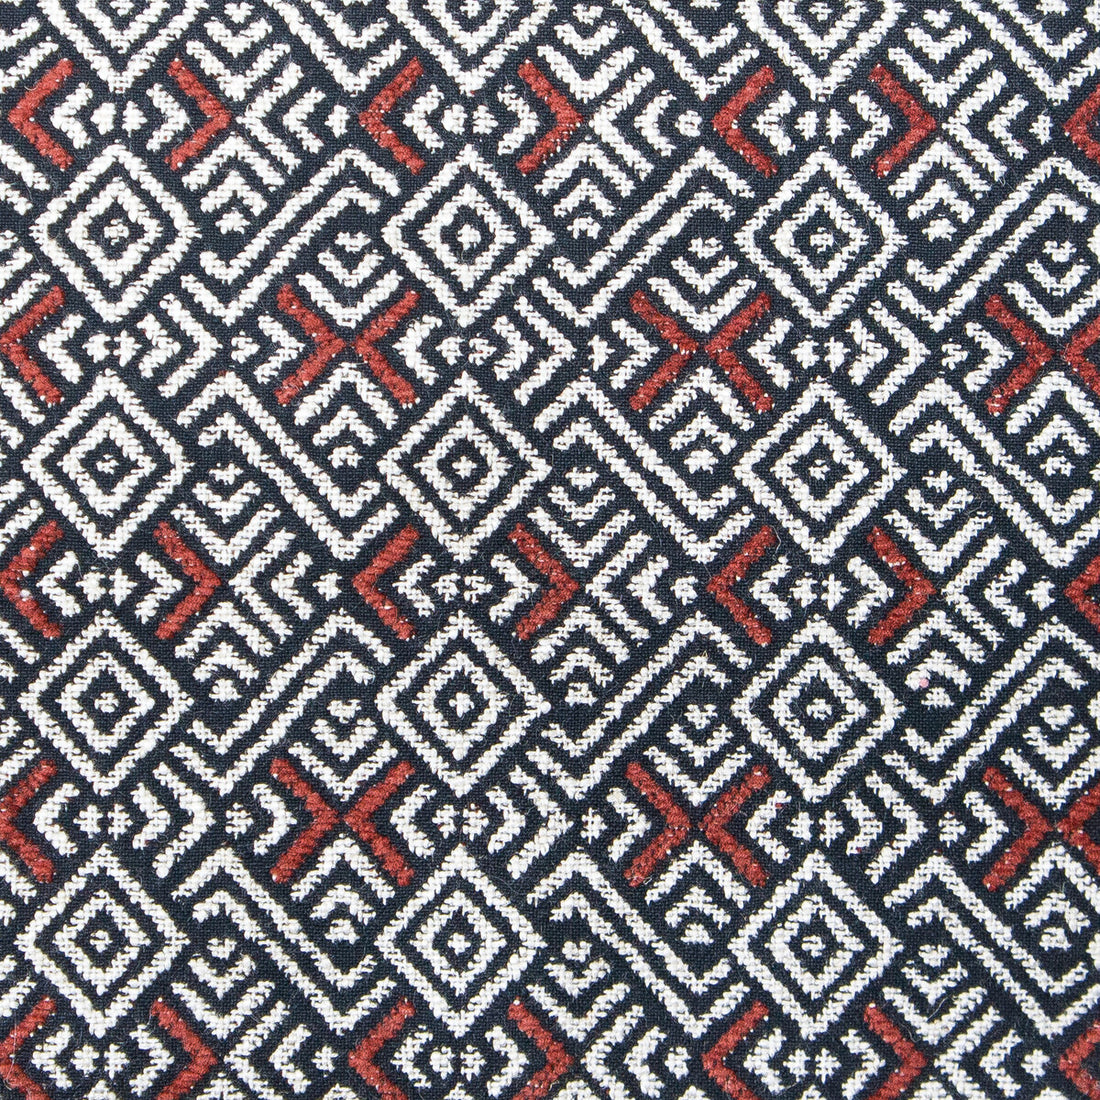 Inca fabric in rojo color - pattern GDT5567.004.0 - by Gaston y Daniela in the Gaston Nuevo Mundo collection